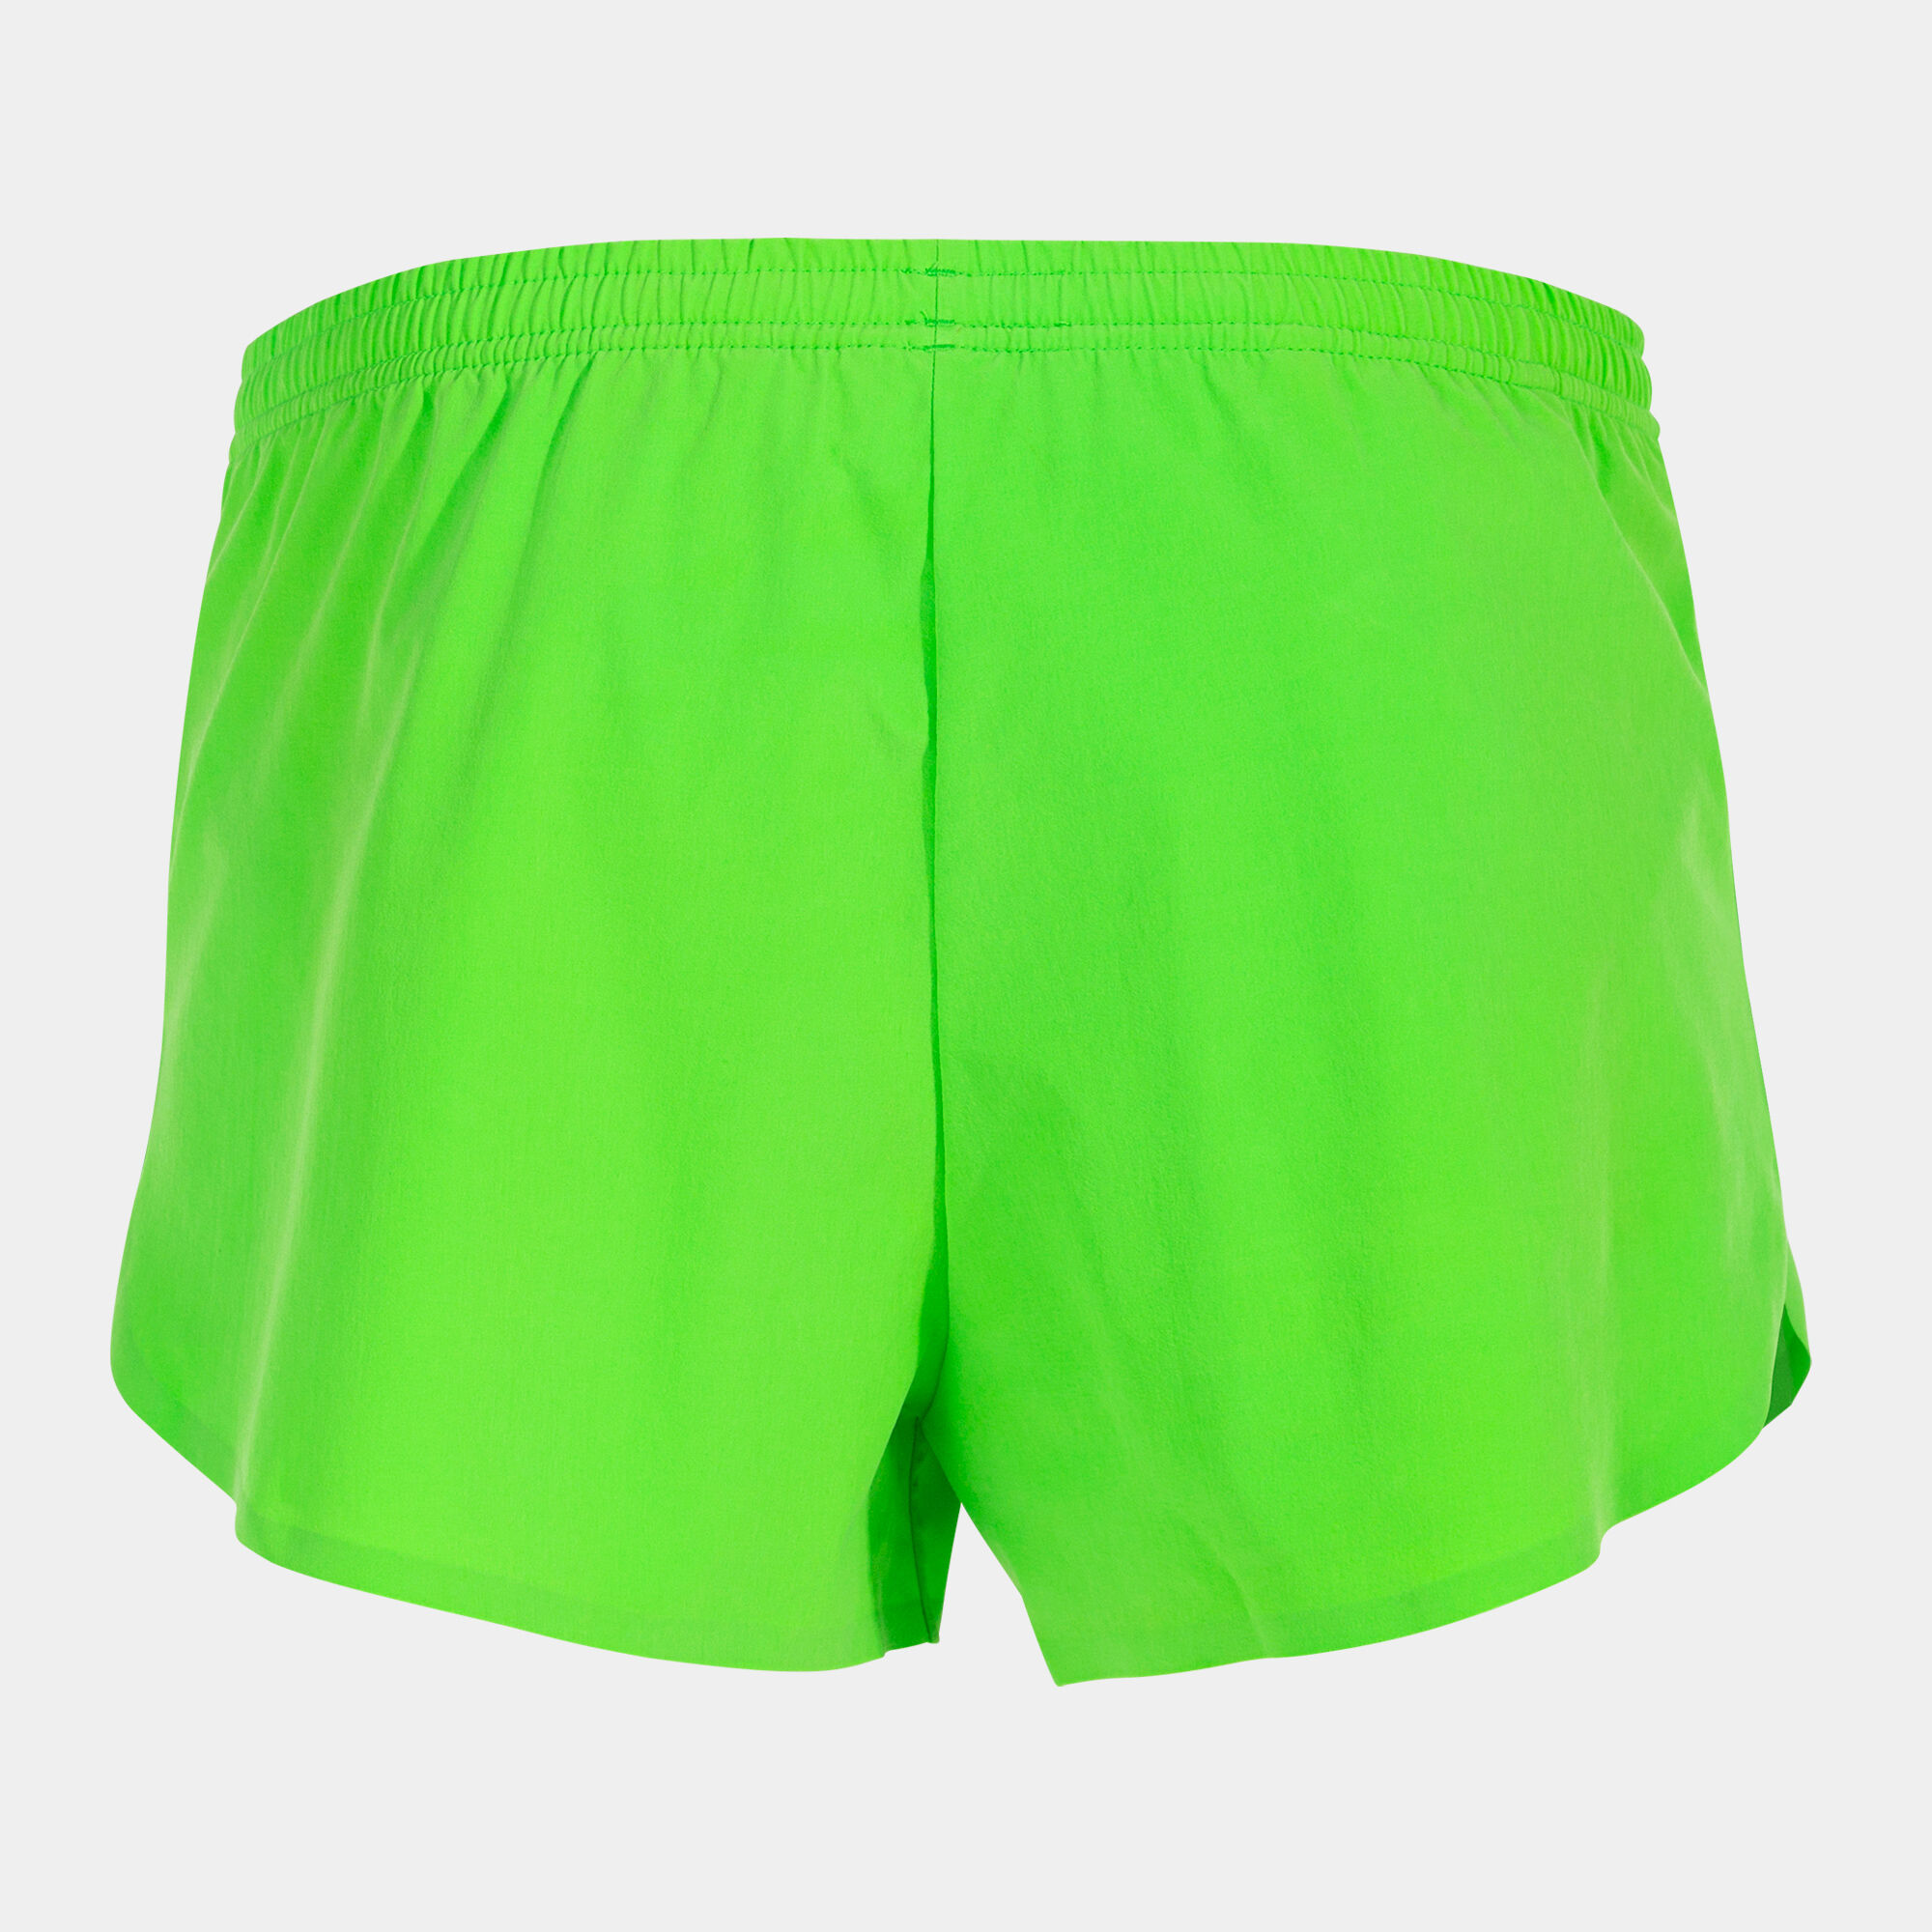 Pantaloncini uomo Olimpia verde fluorescente